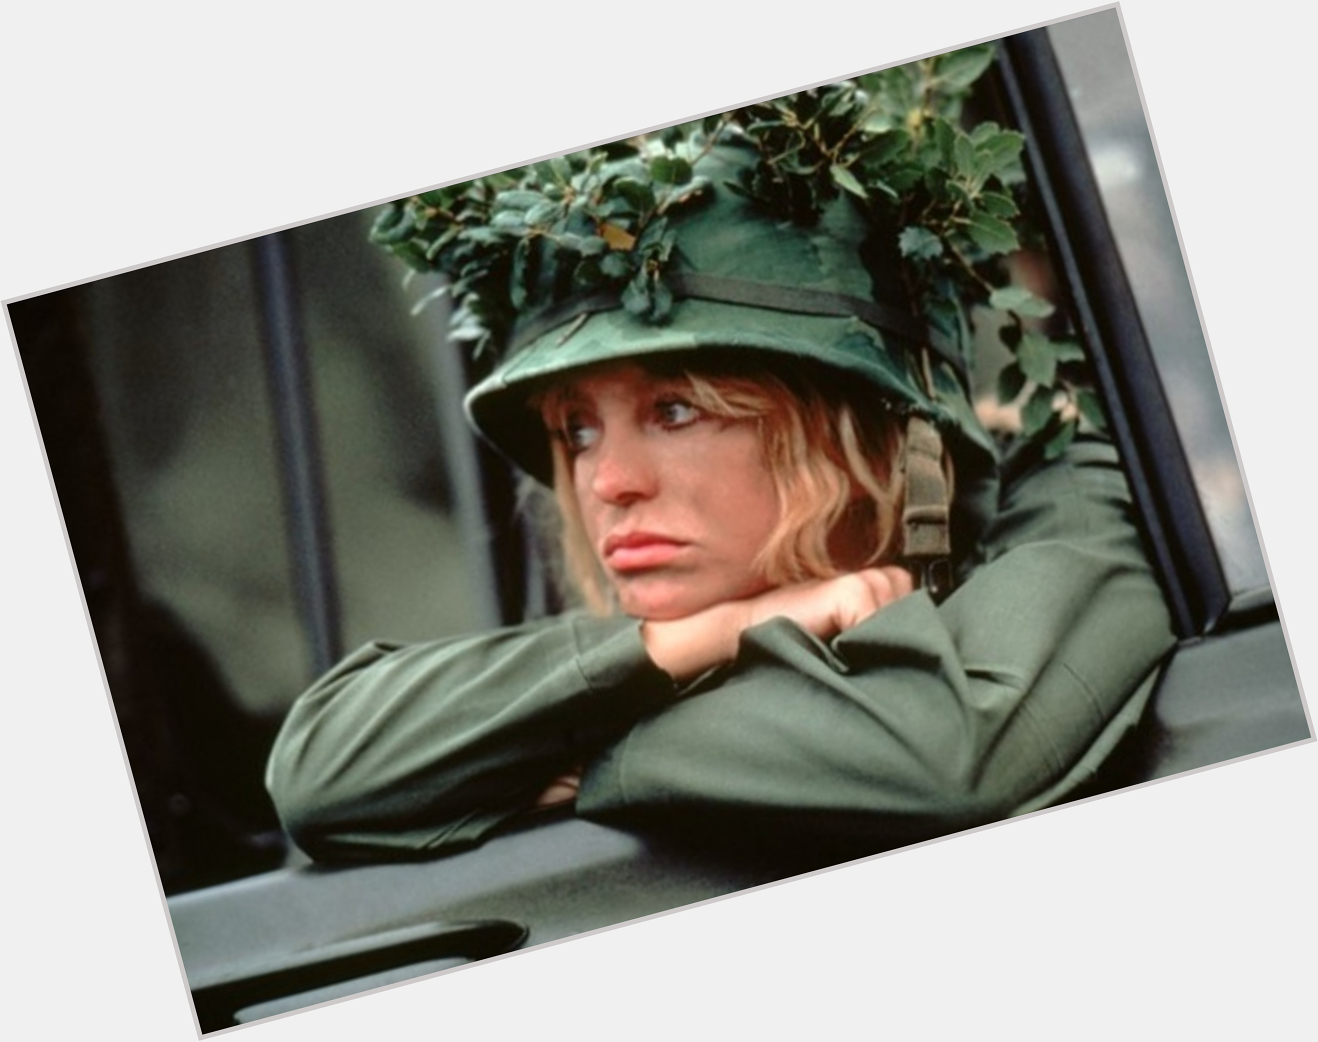 Happy birthday to Oscar Winner - Goldie Hawn   Who is 76yo today!
(Starring in Private Benjamin - 1980 below) 